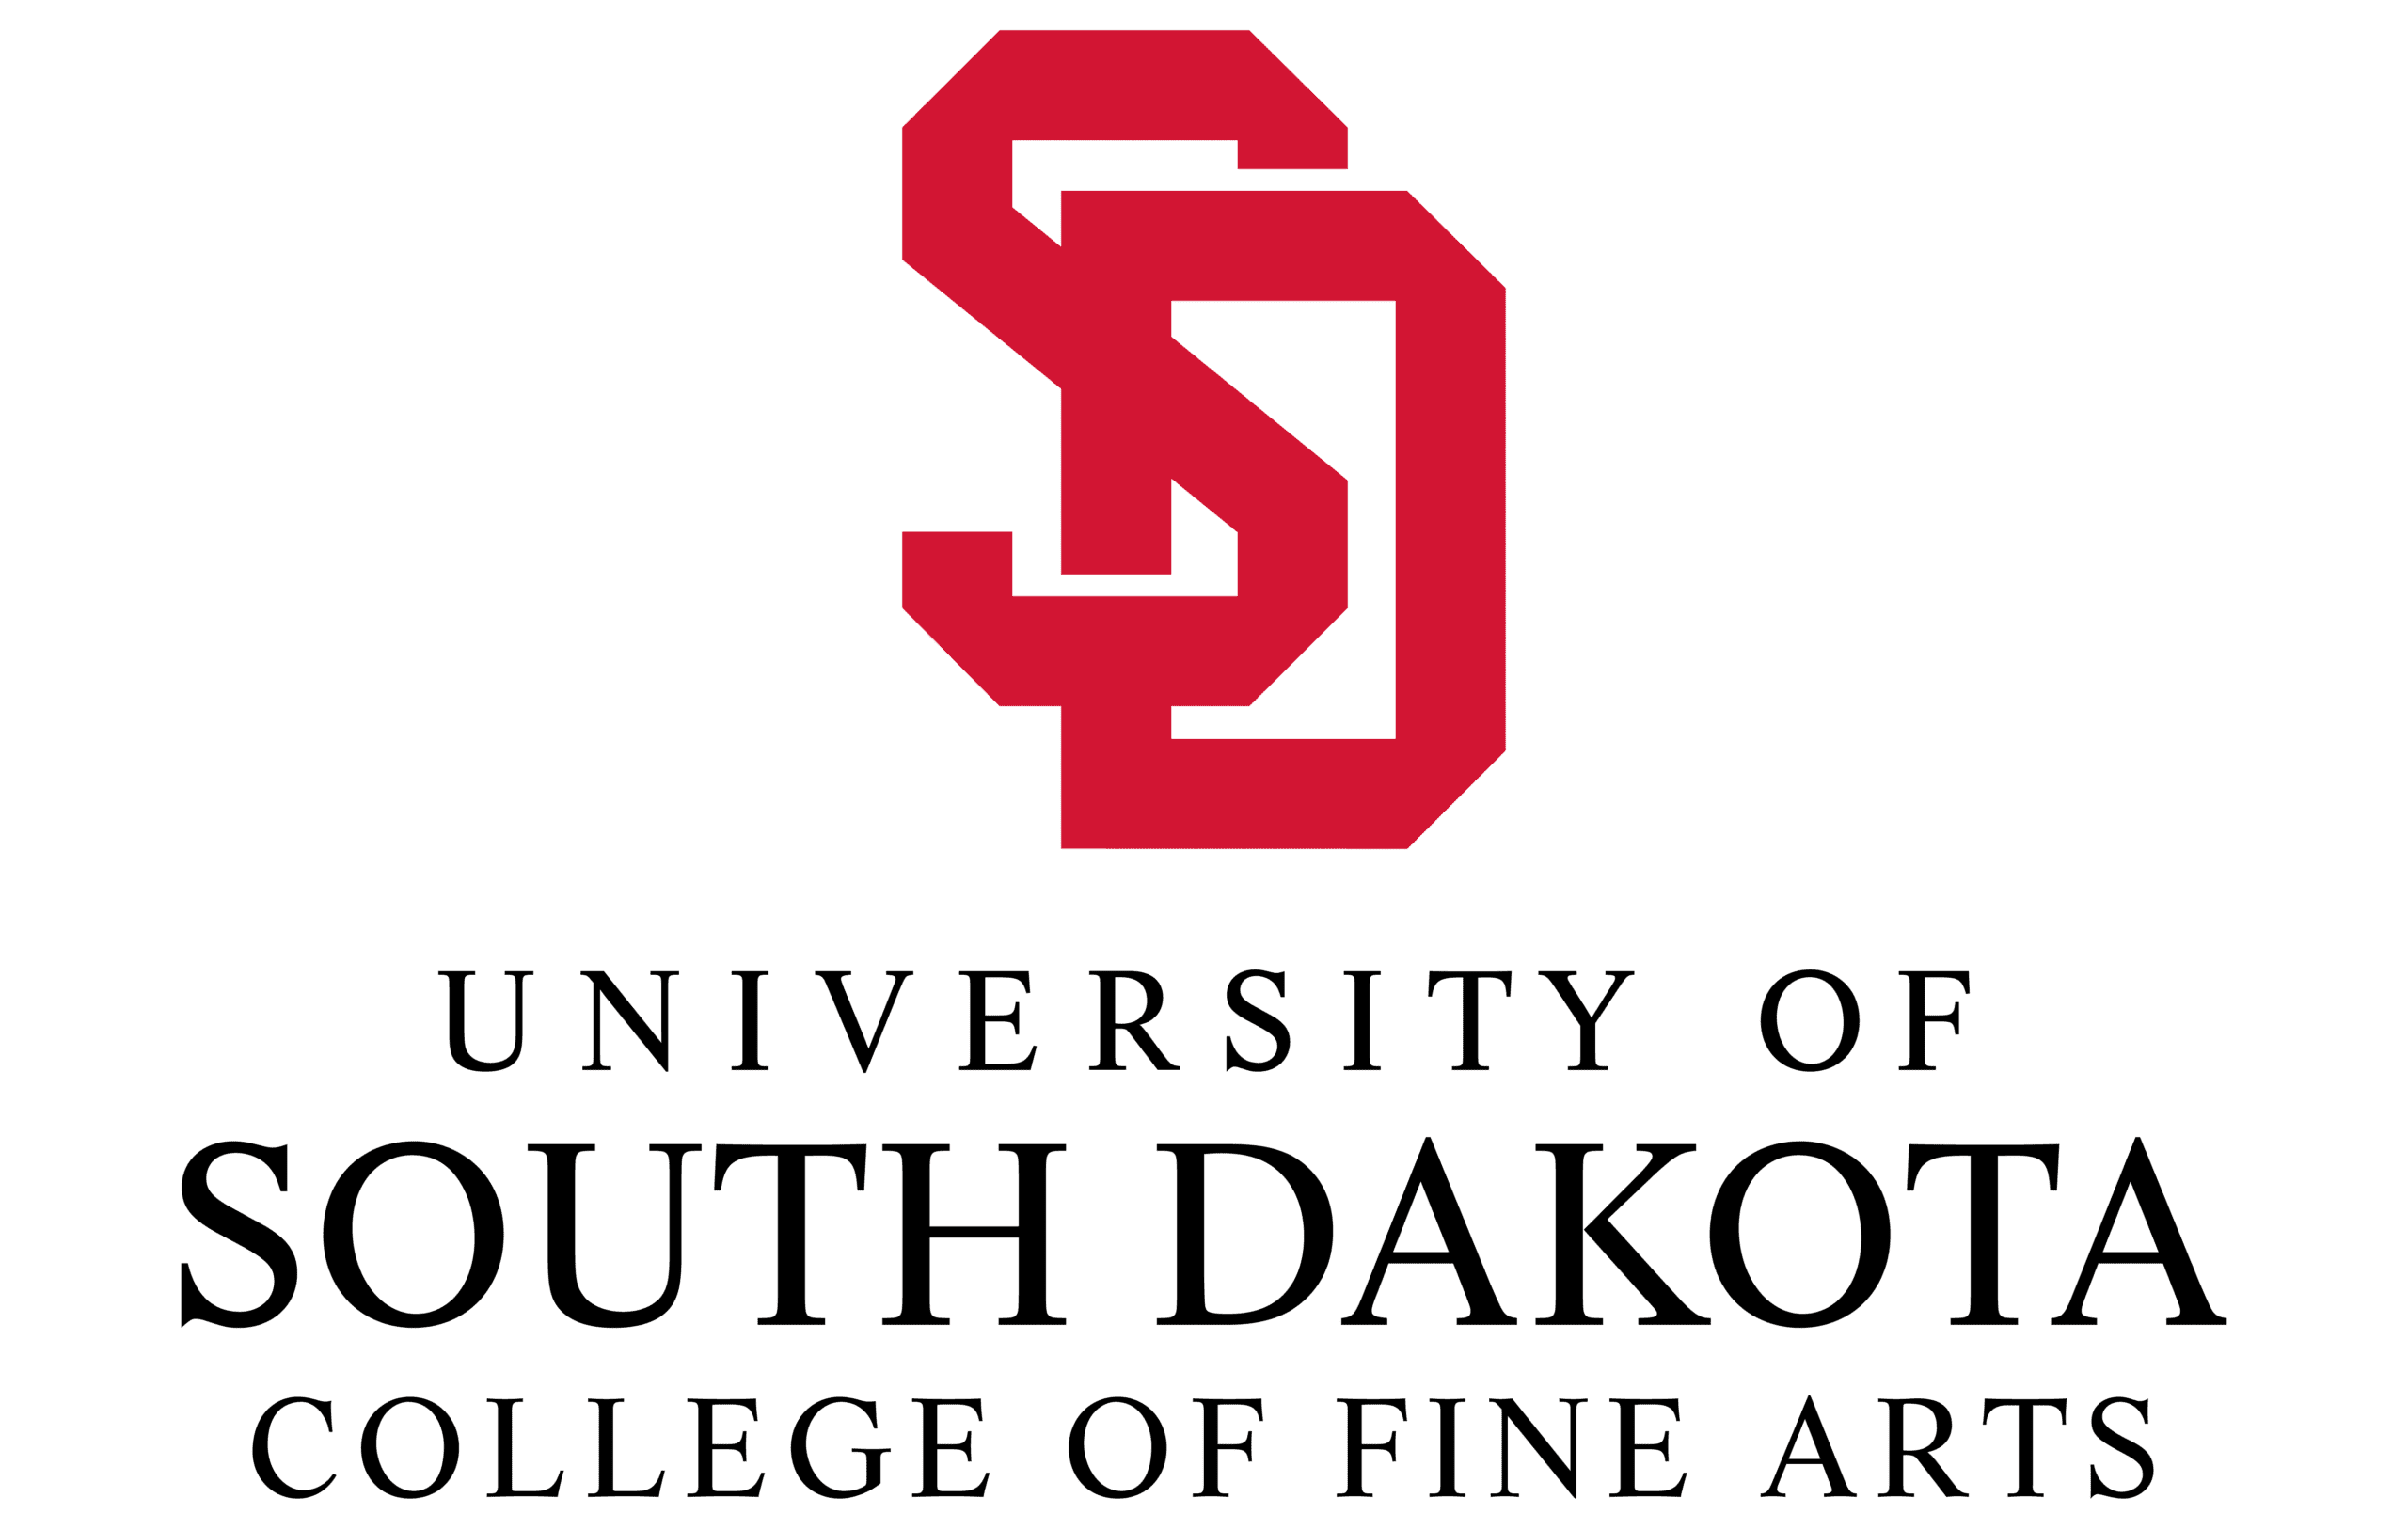 University of South Dakota College of Fine Arts